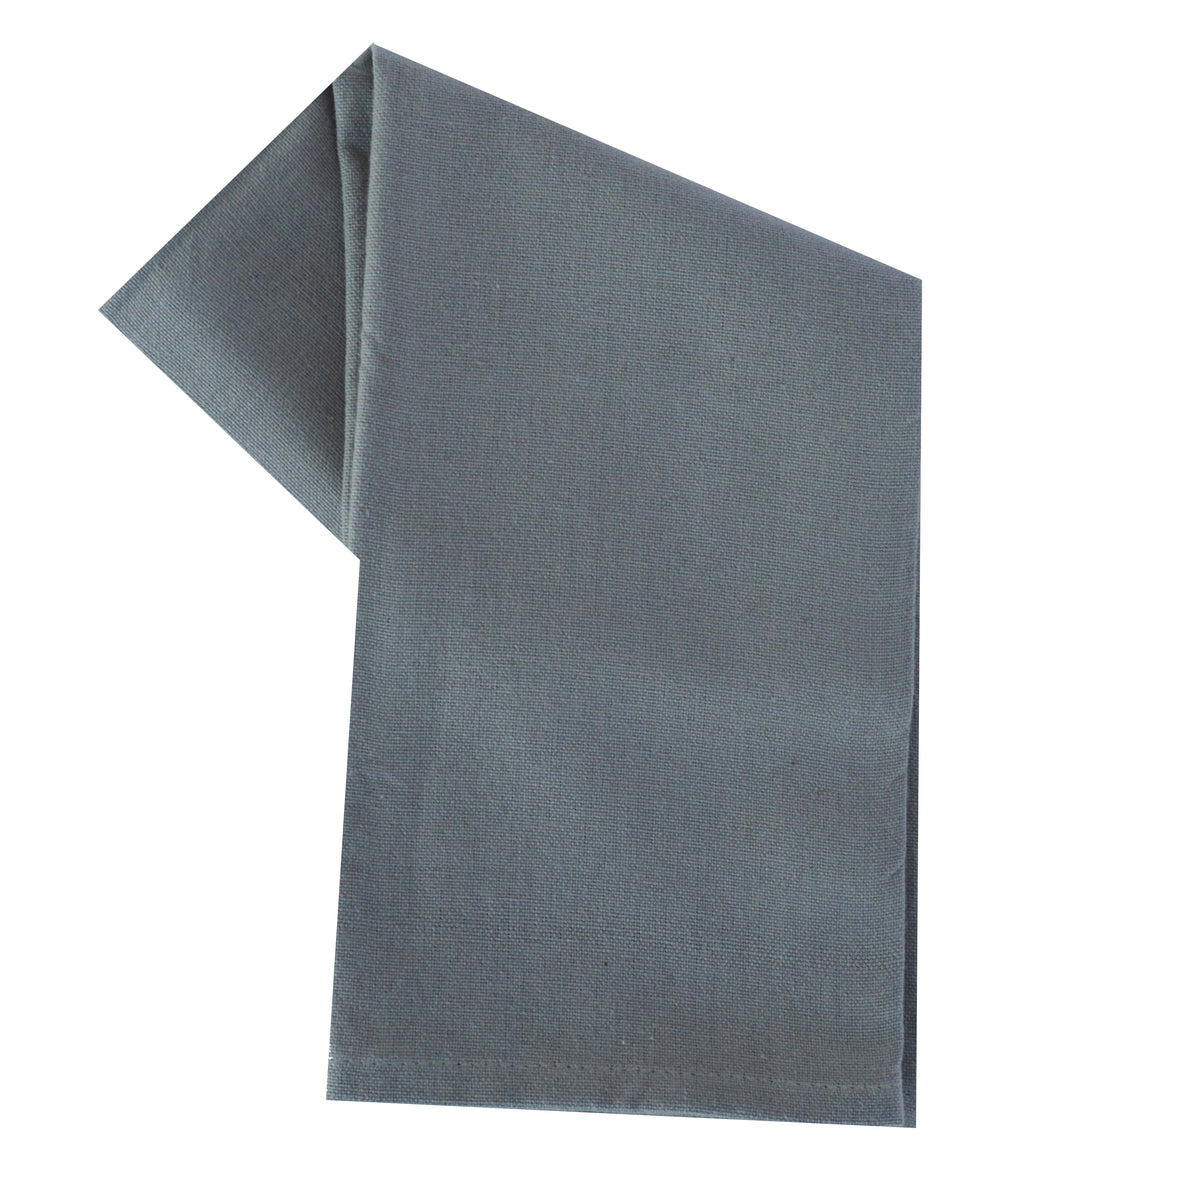 Variety Towel Set - Gray Set of 4